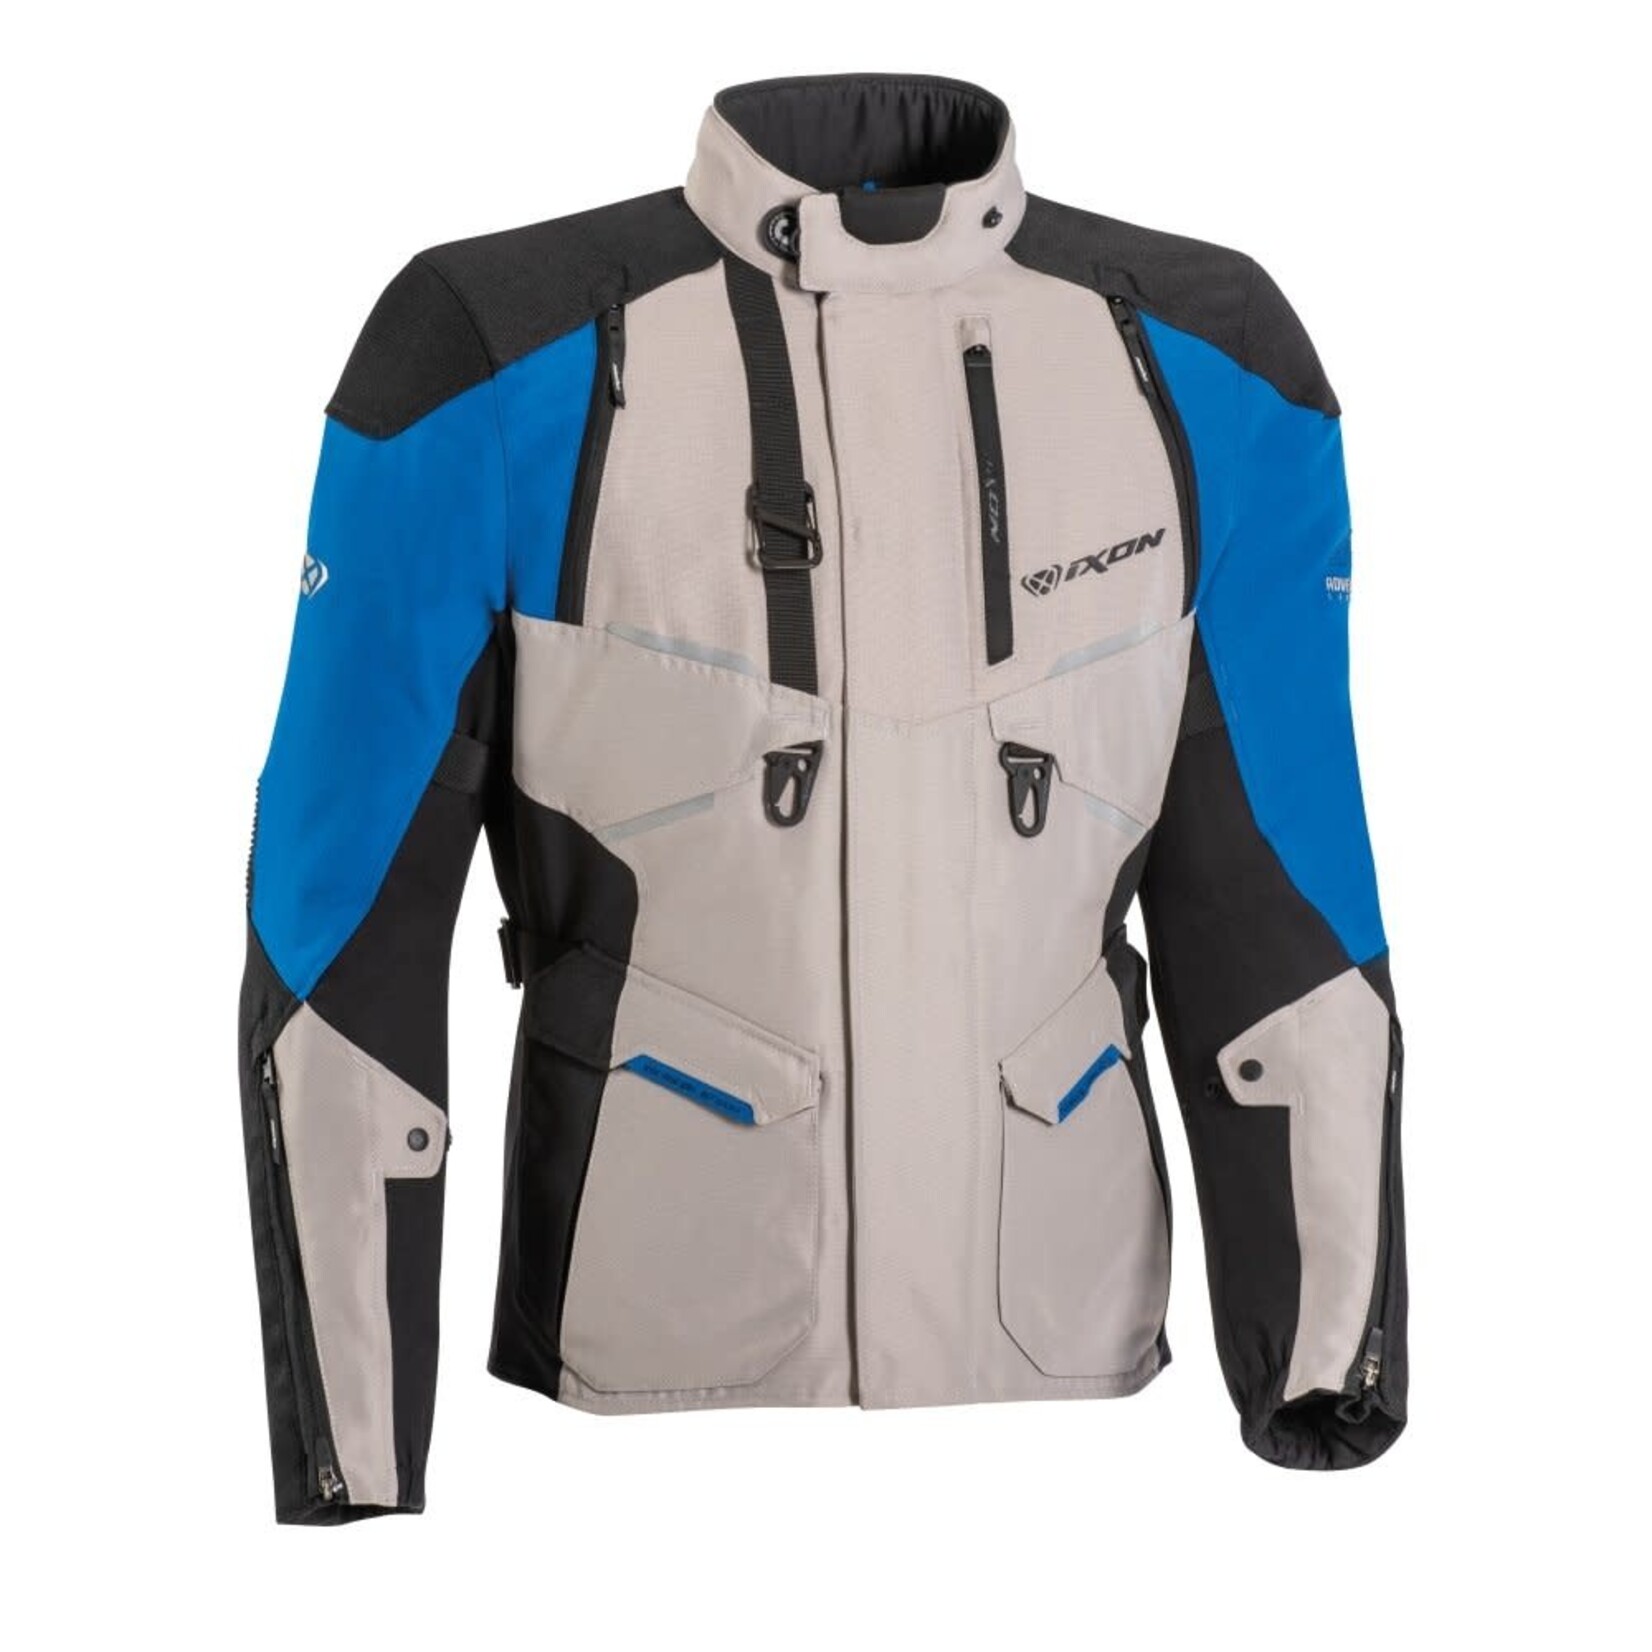 Ixon Ixon jacket textile eddas grege/blue/black